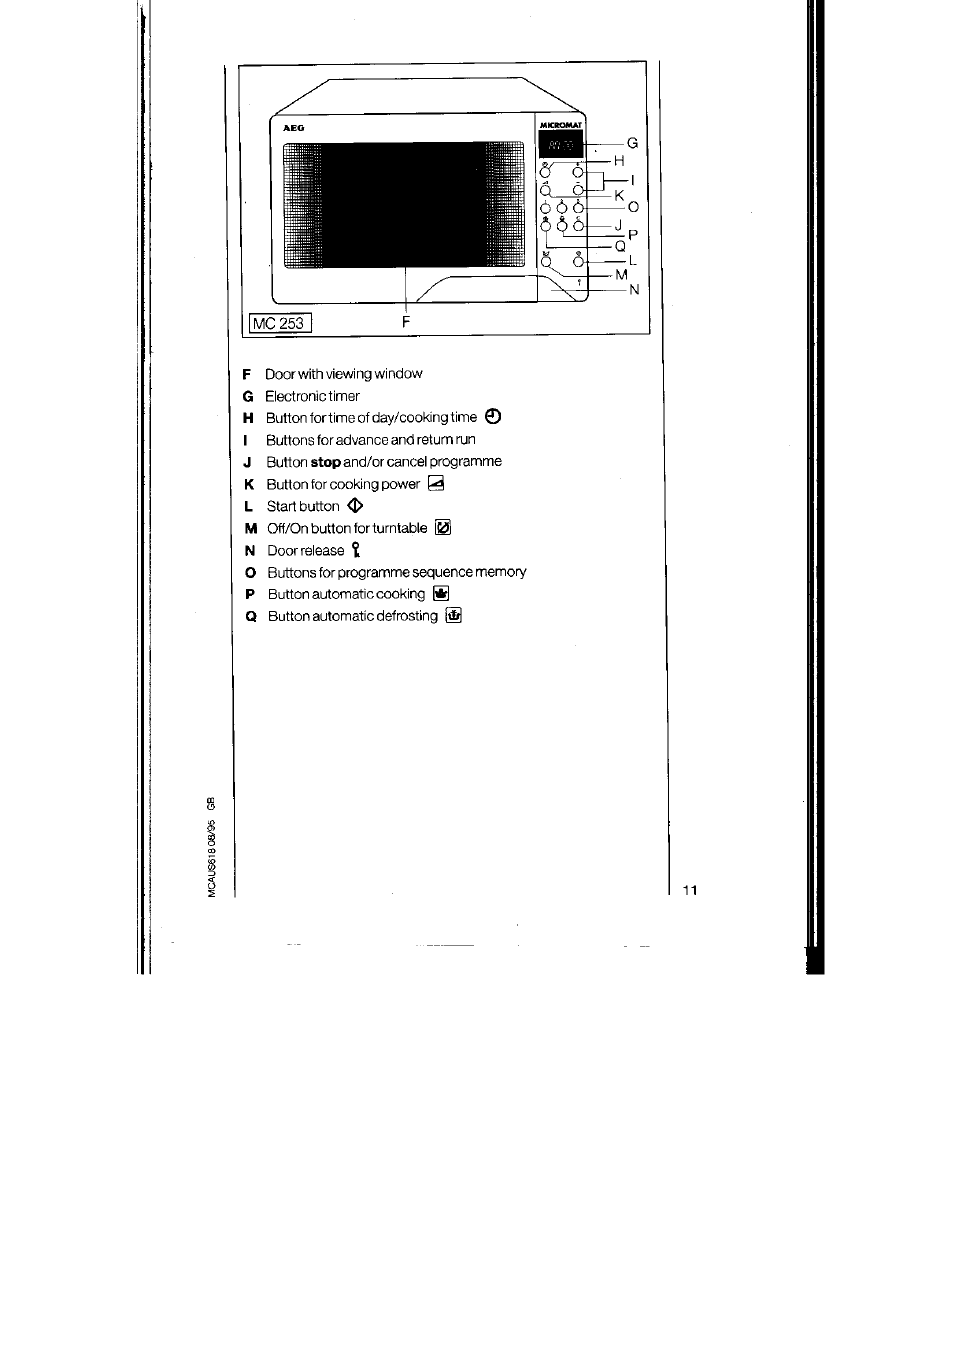 AEG MICROMAT 125 User Manual | Page 11 / 36 | Original mode